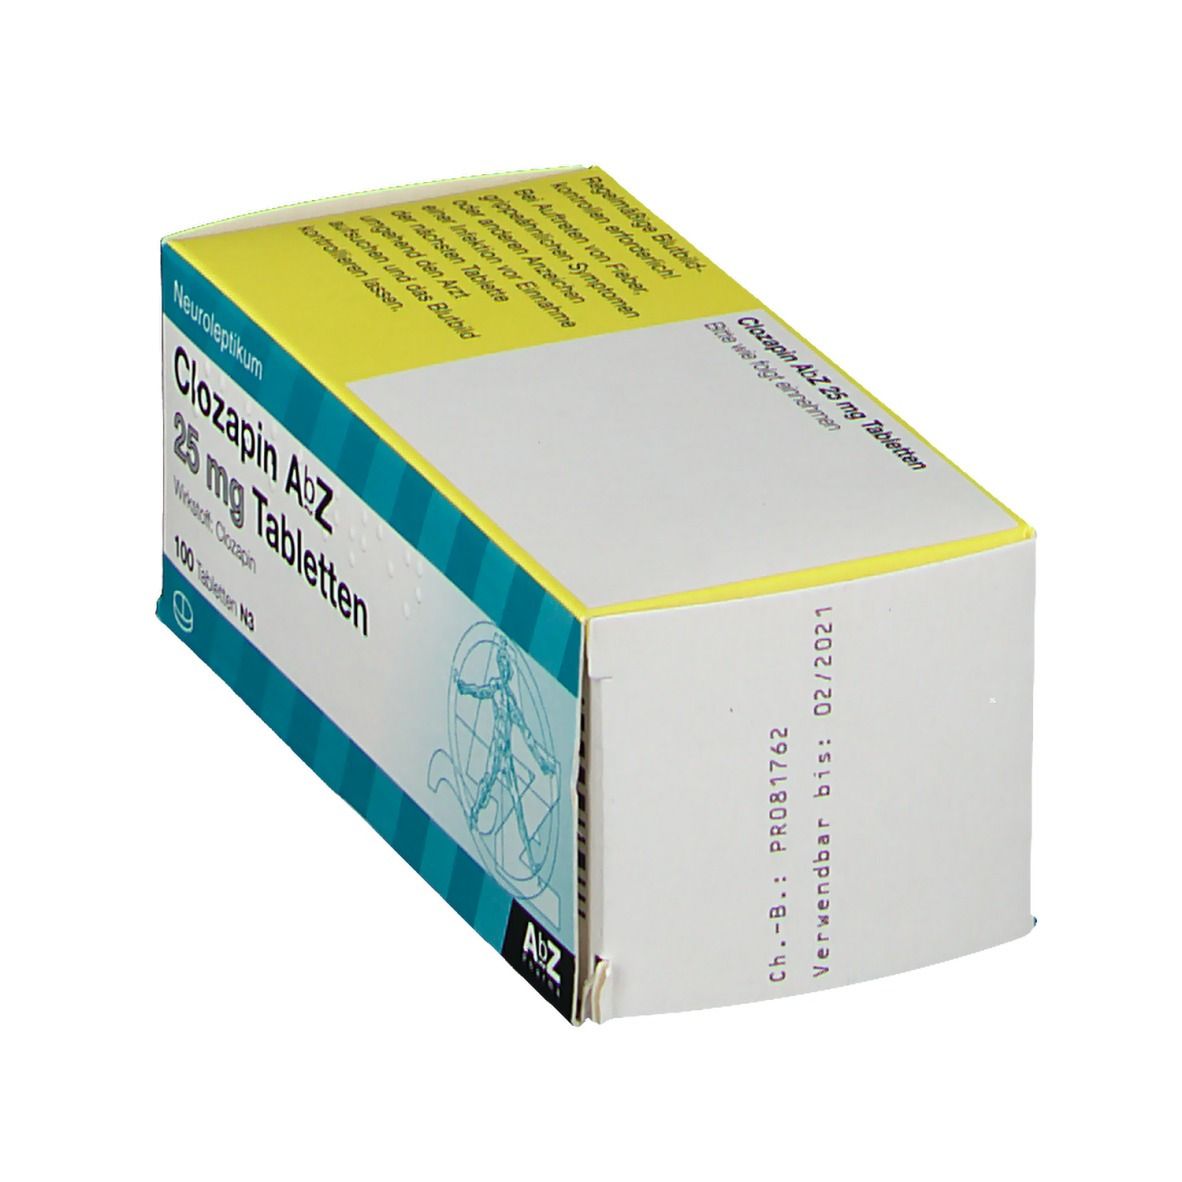 Clozapin AbZ 25 mg